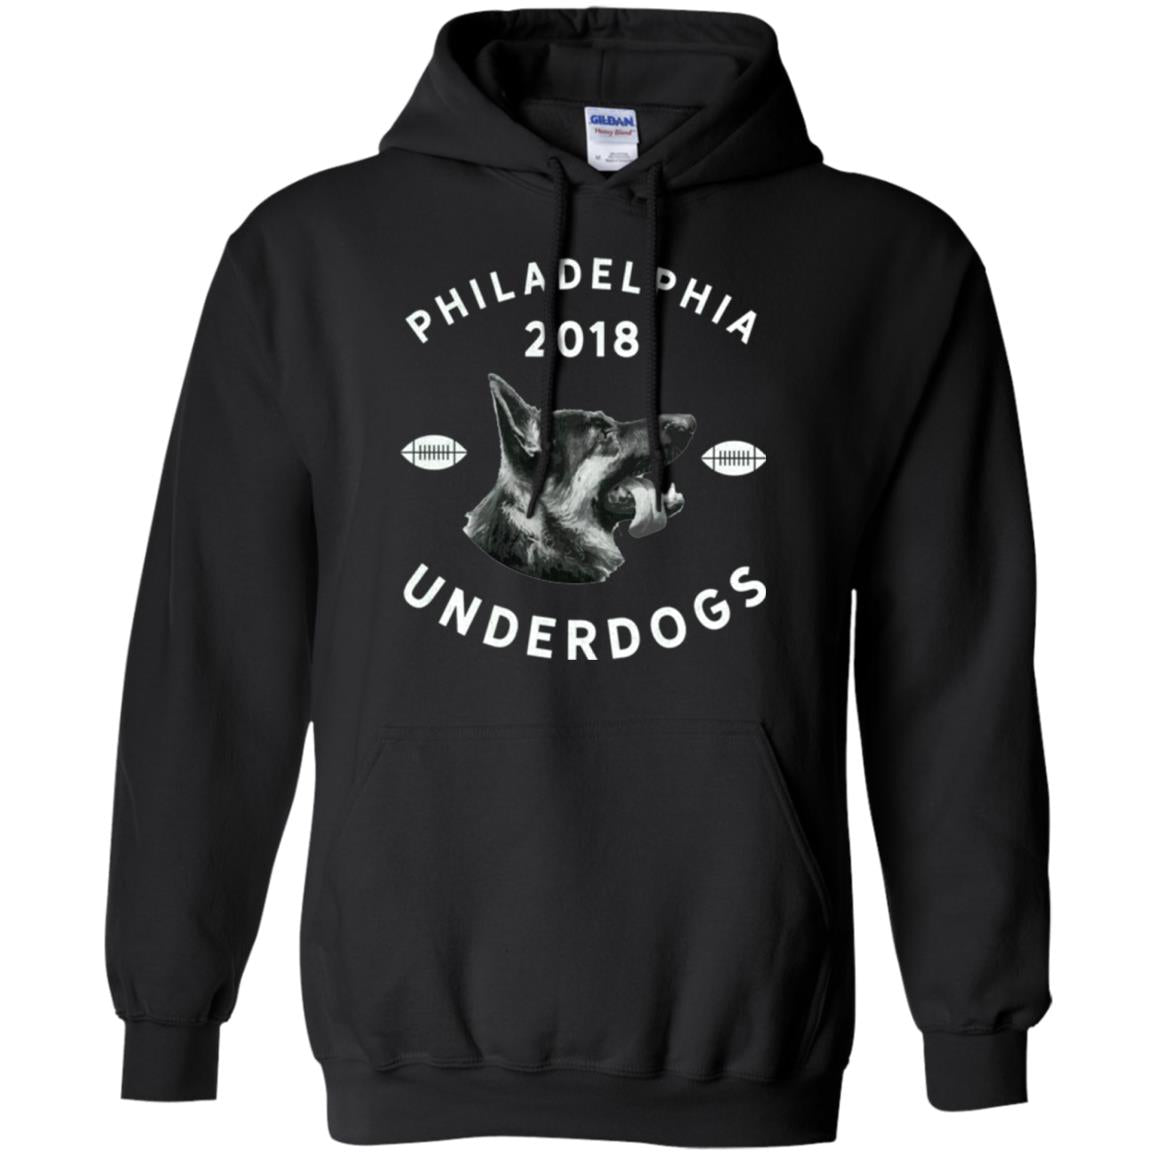 Dog Lover T-shirt Philly Philadelphia Underdogs 2018 Game Day